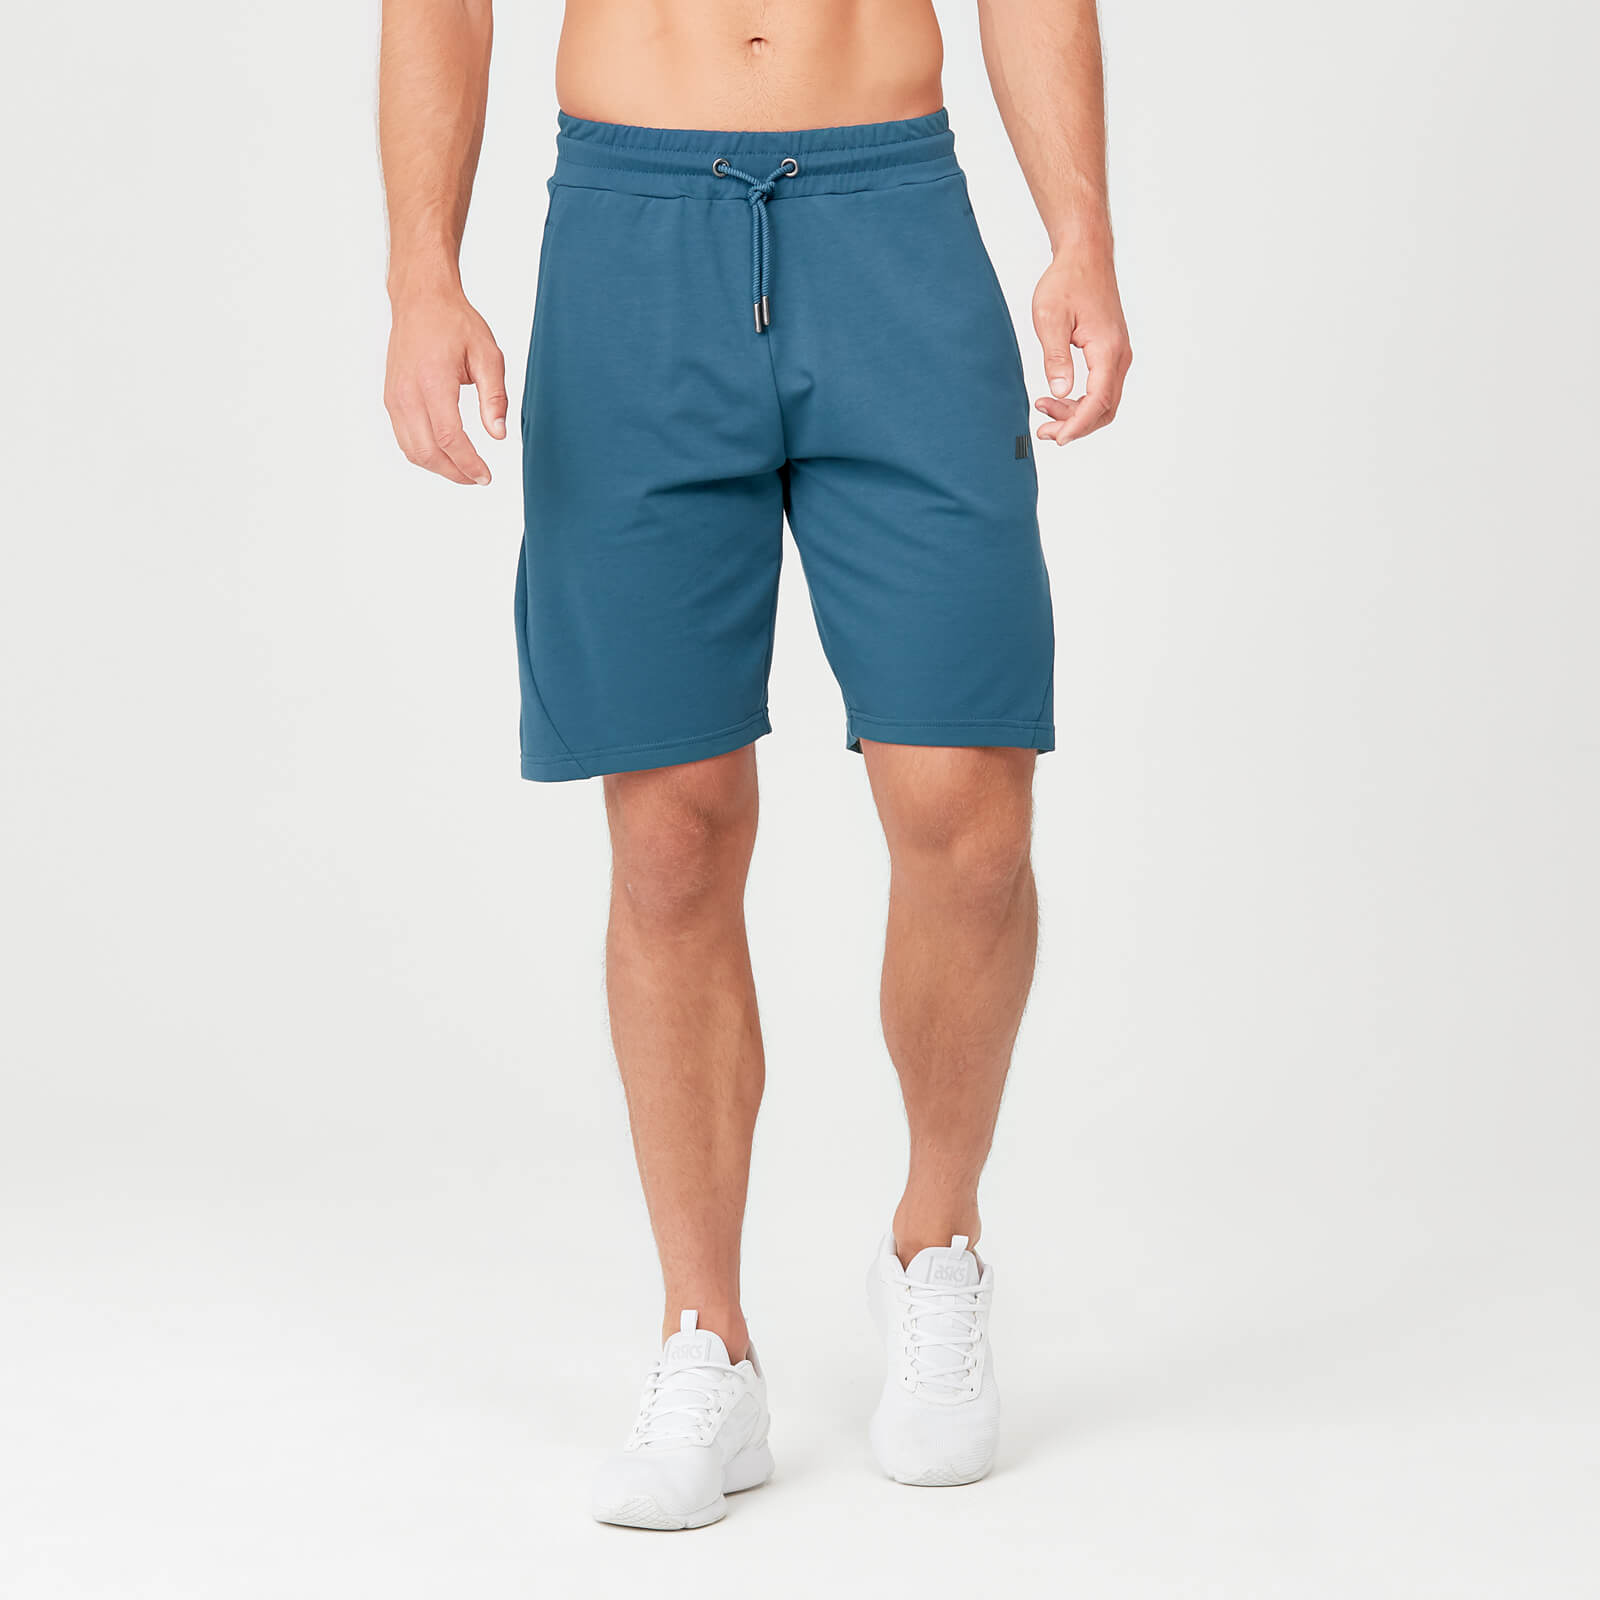 Form Sweat Shorts - Petrol Blue